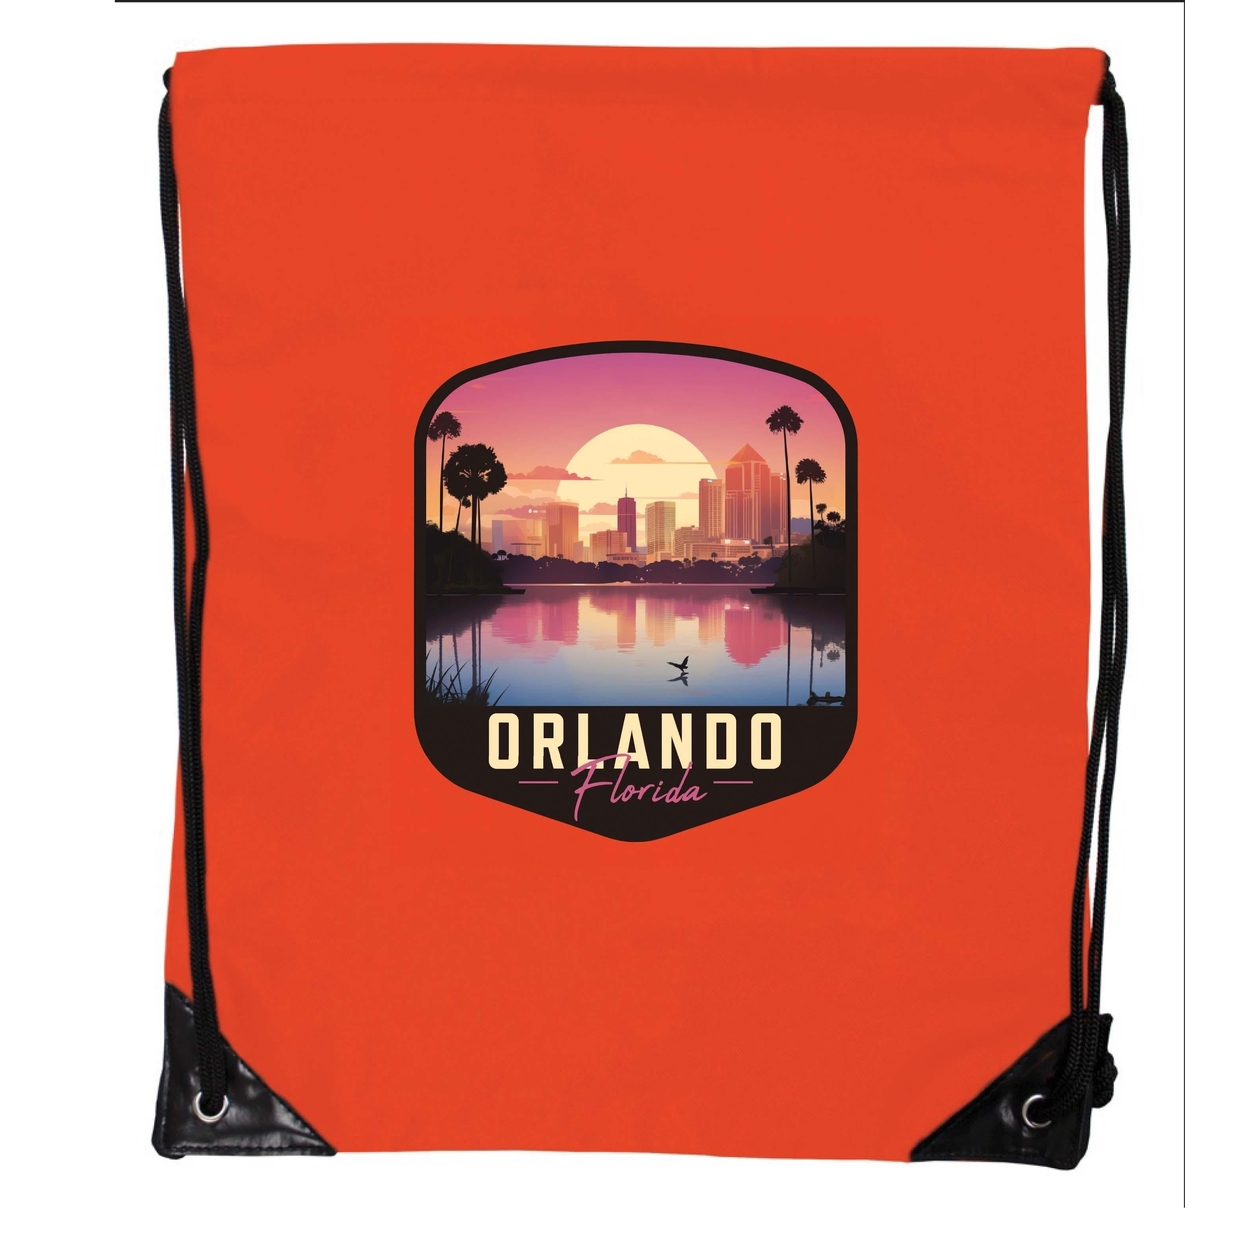 Orlando Florida A Souvenir Cinch Bag With Drawstring Backpack - Orange